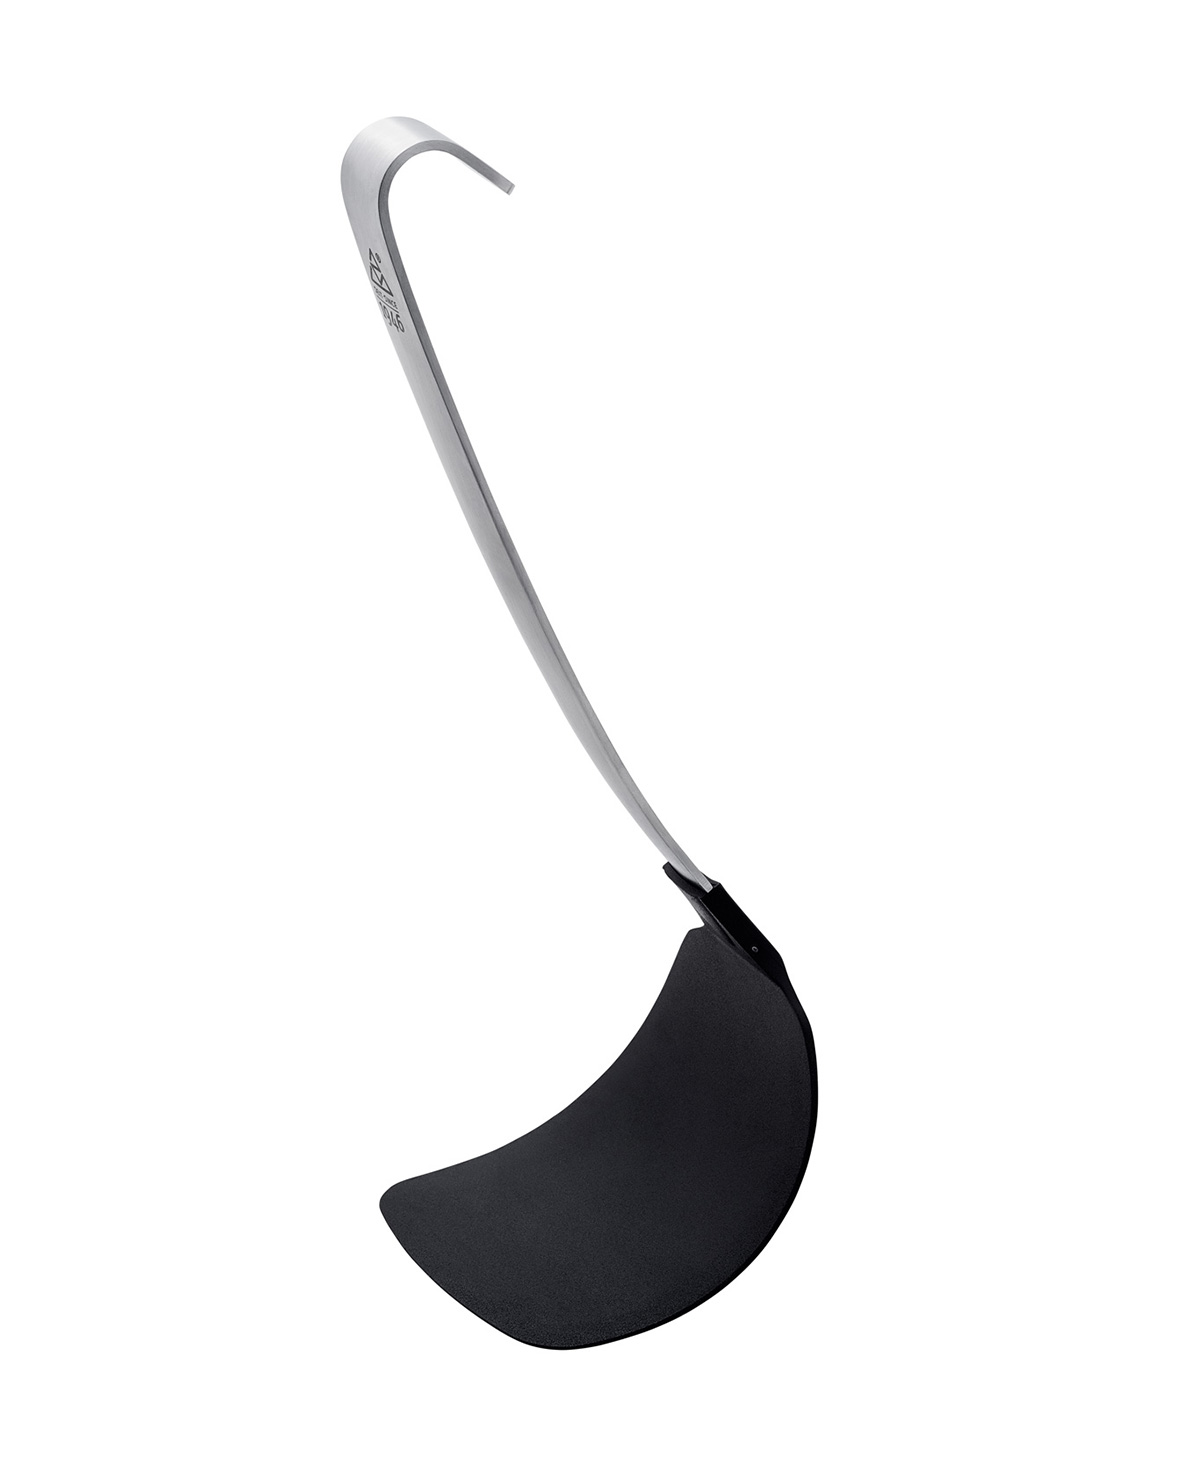 turner flexible triangle series 1946 stainless steel Nylon spatula